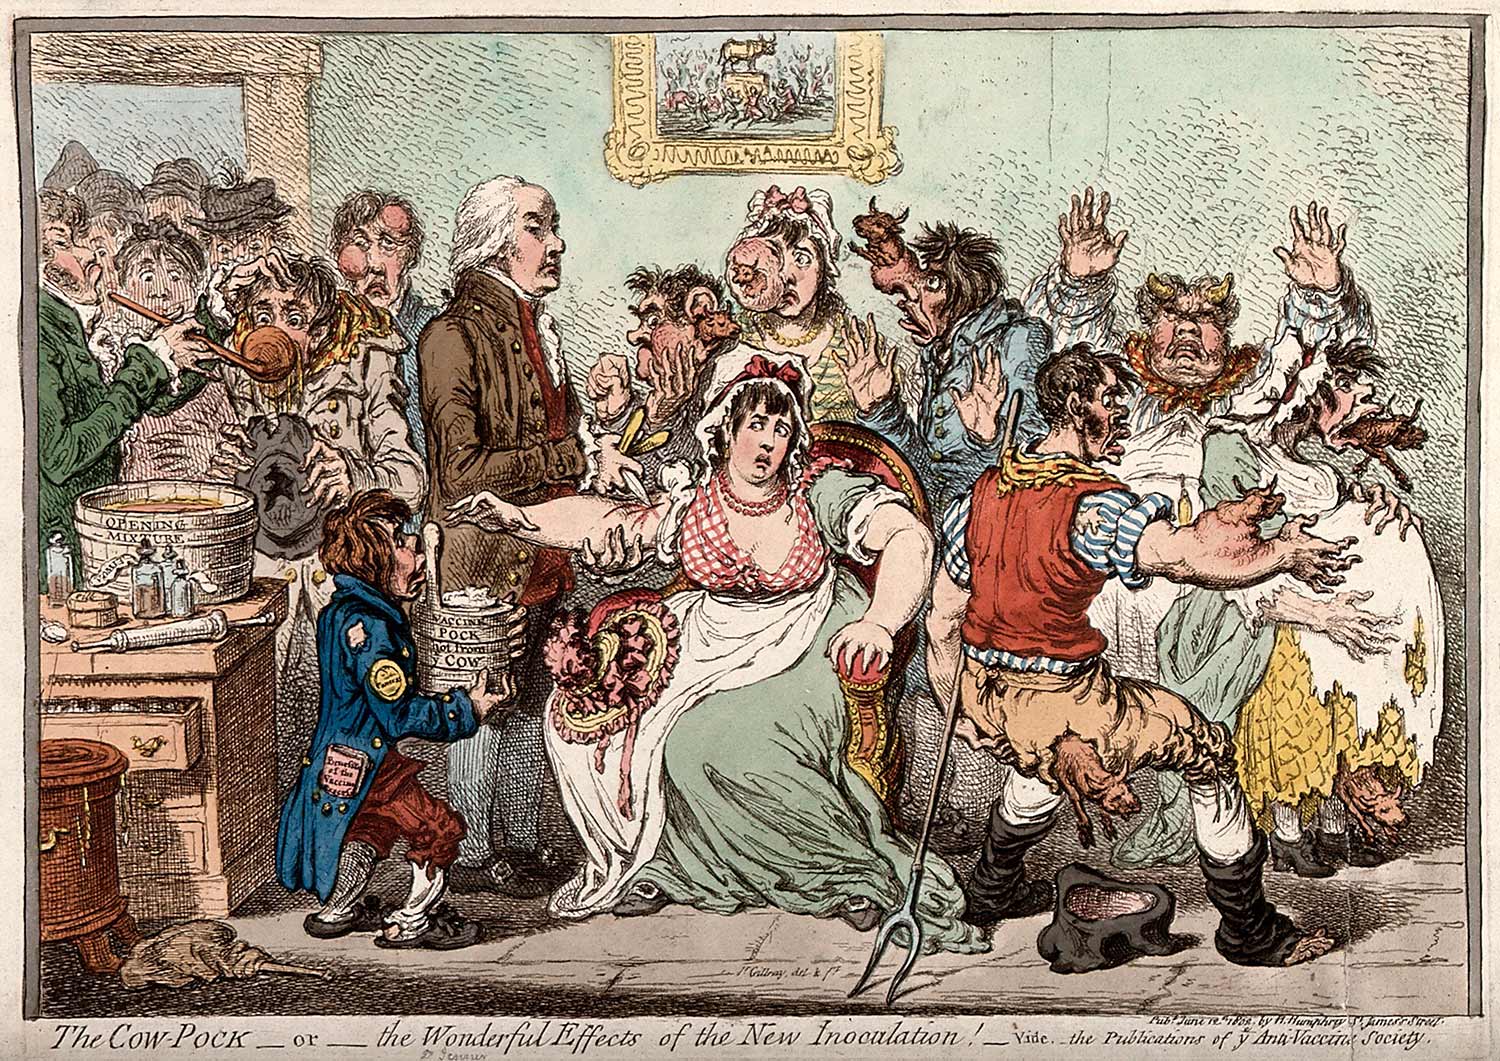 1802 cartoon critiquing the smallpox vaccine.